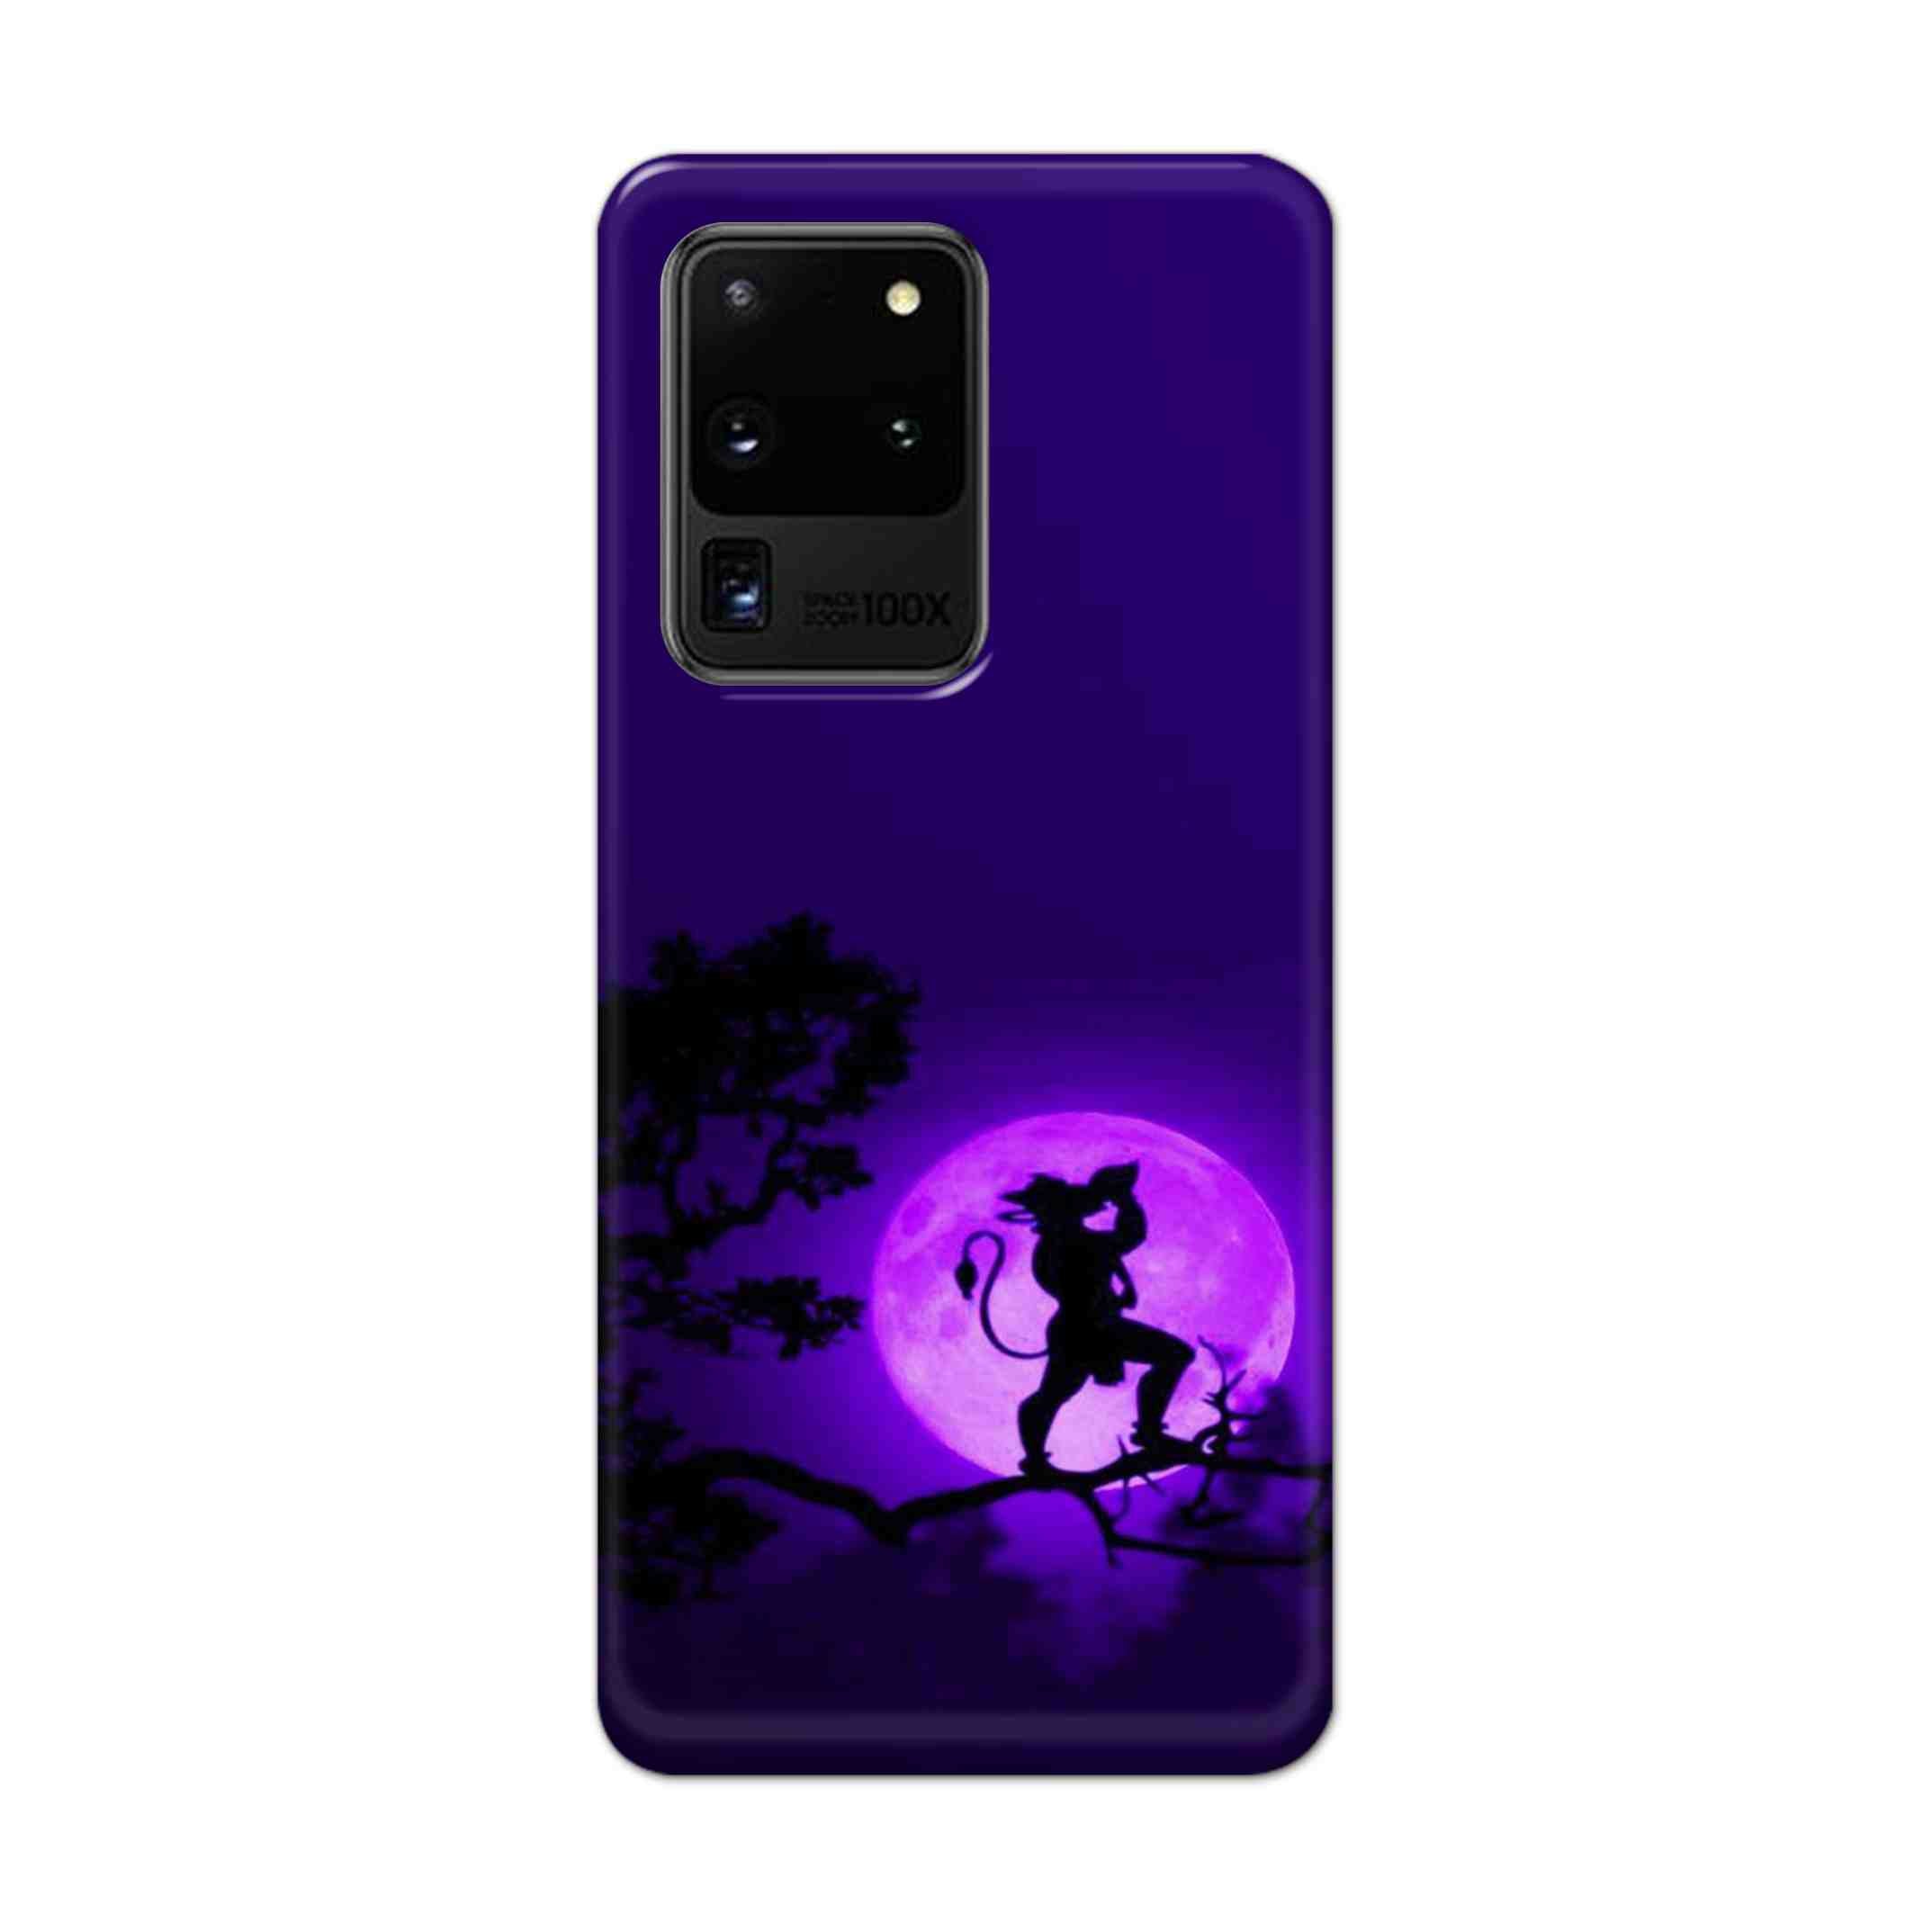 Buy Hanuman Hard Back Mobile Phone Case Cover For Samsung Galaxy S20 Ultra Online